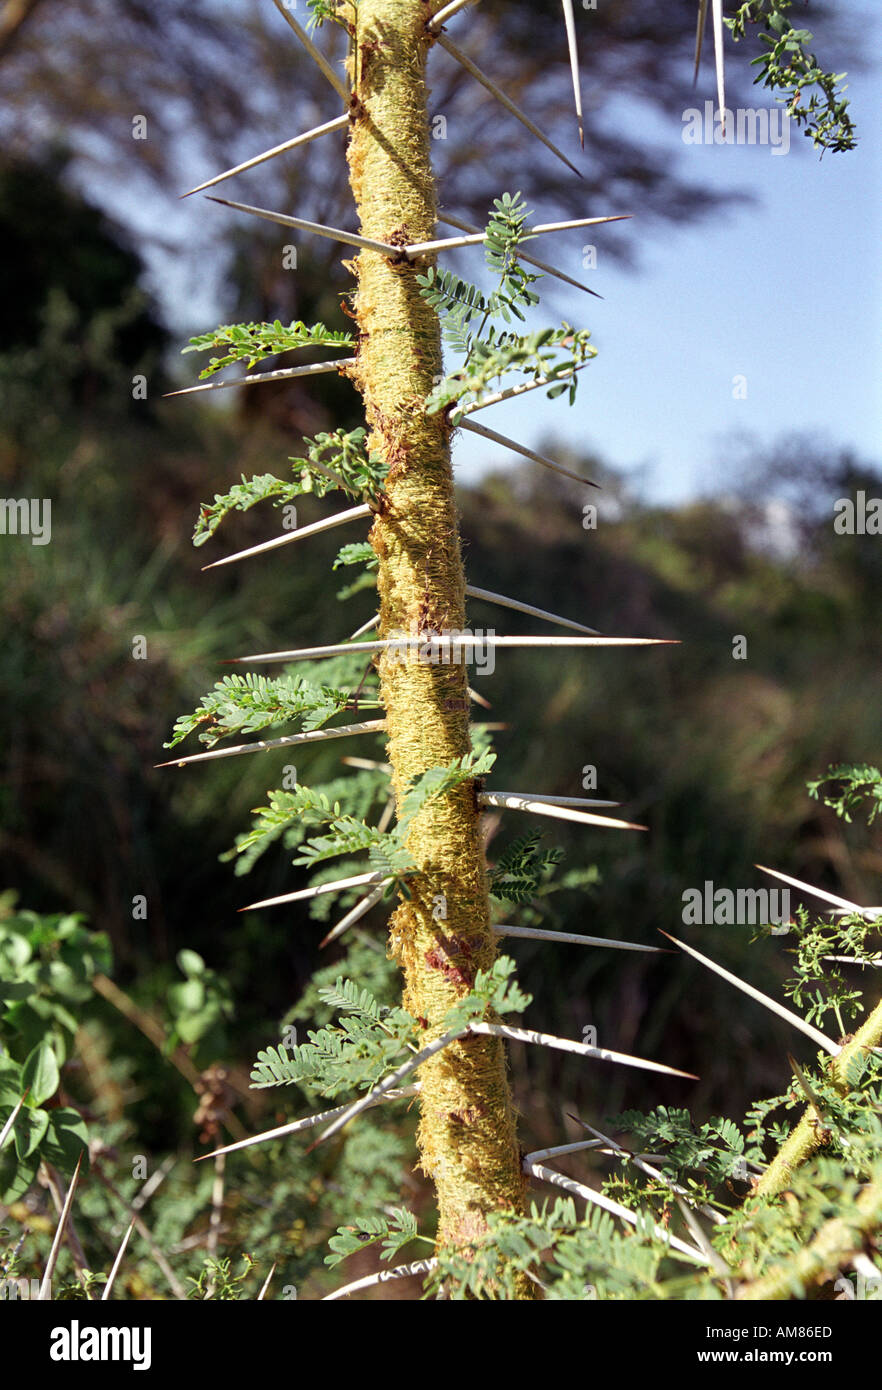 Thorns on an Acacia tree Stock Photo